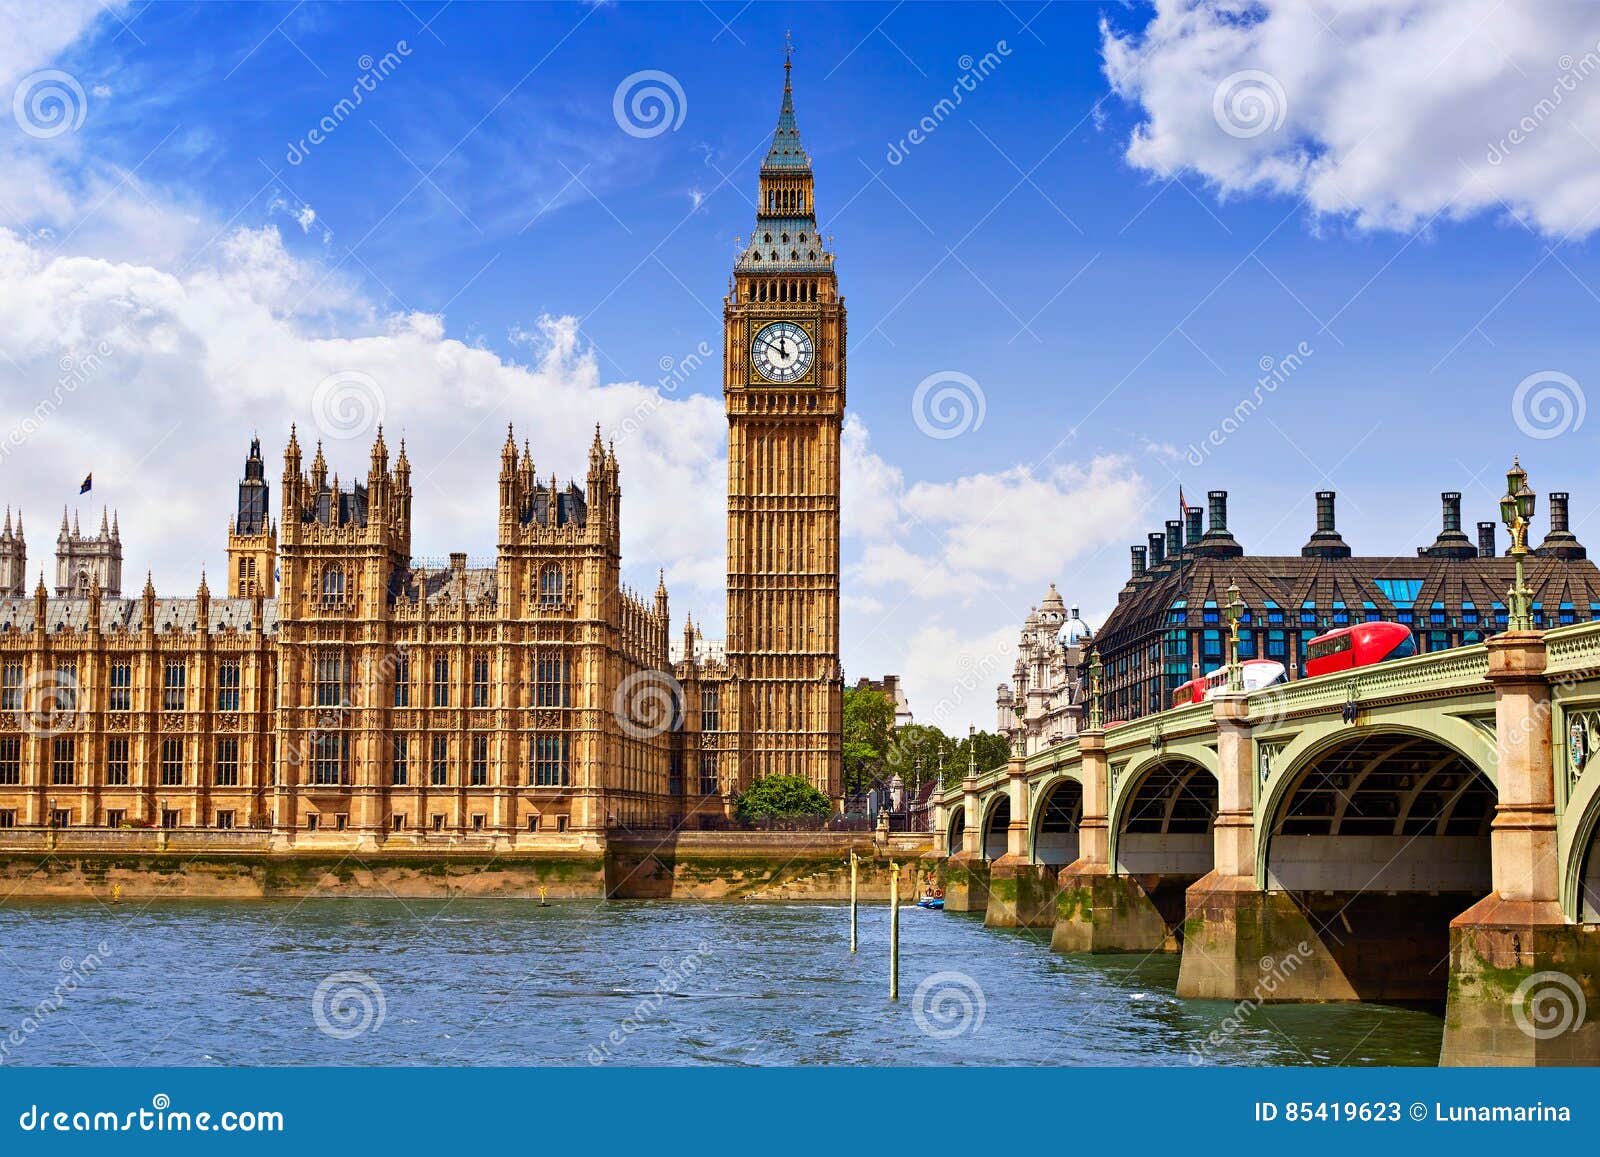 big ben london clock tower in uk thames